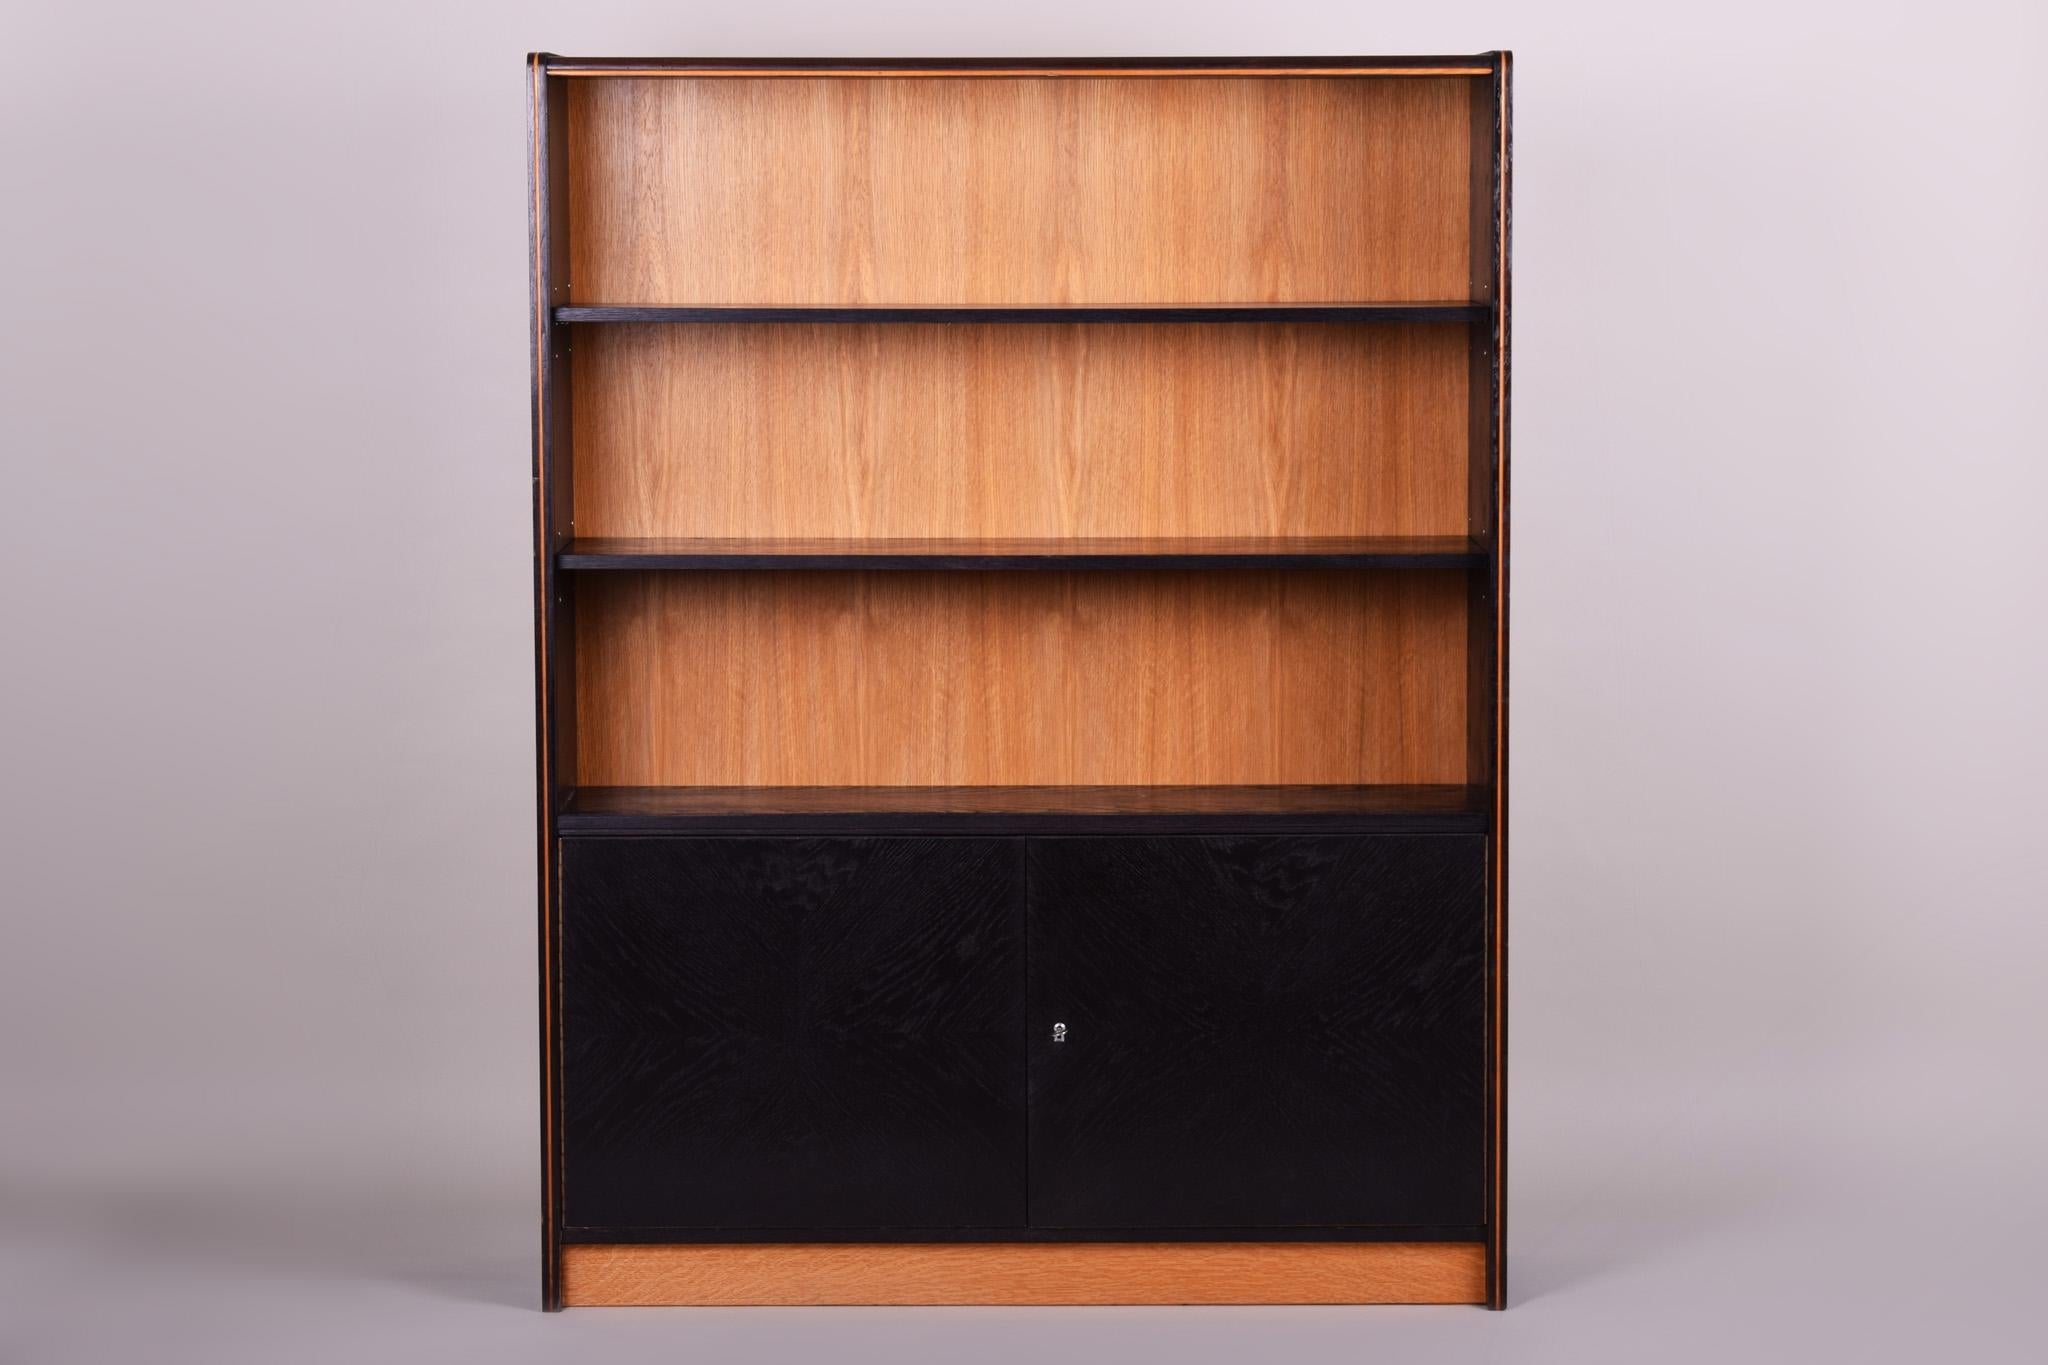 20th century mid-century display cabinet
Material: oak.